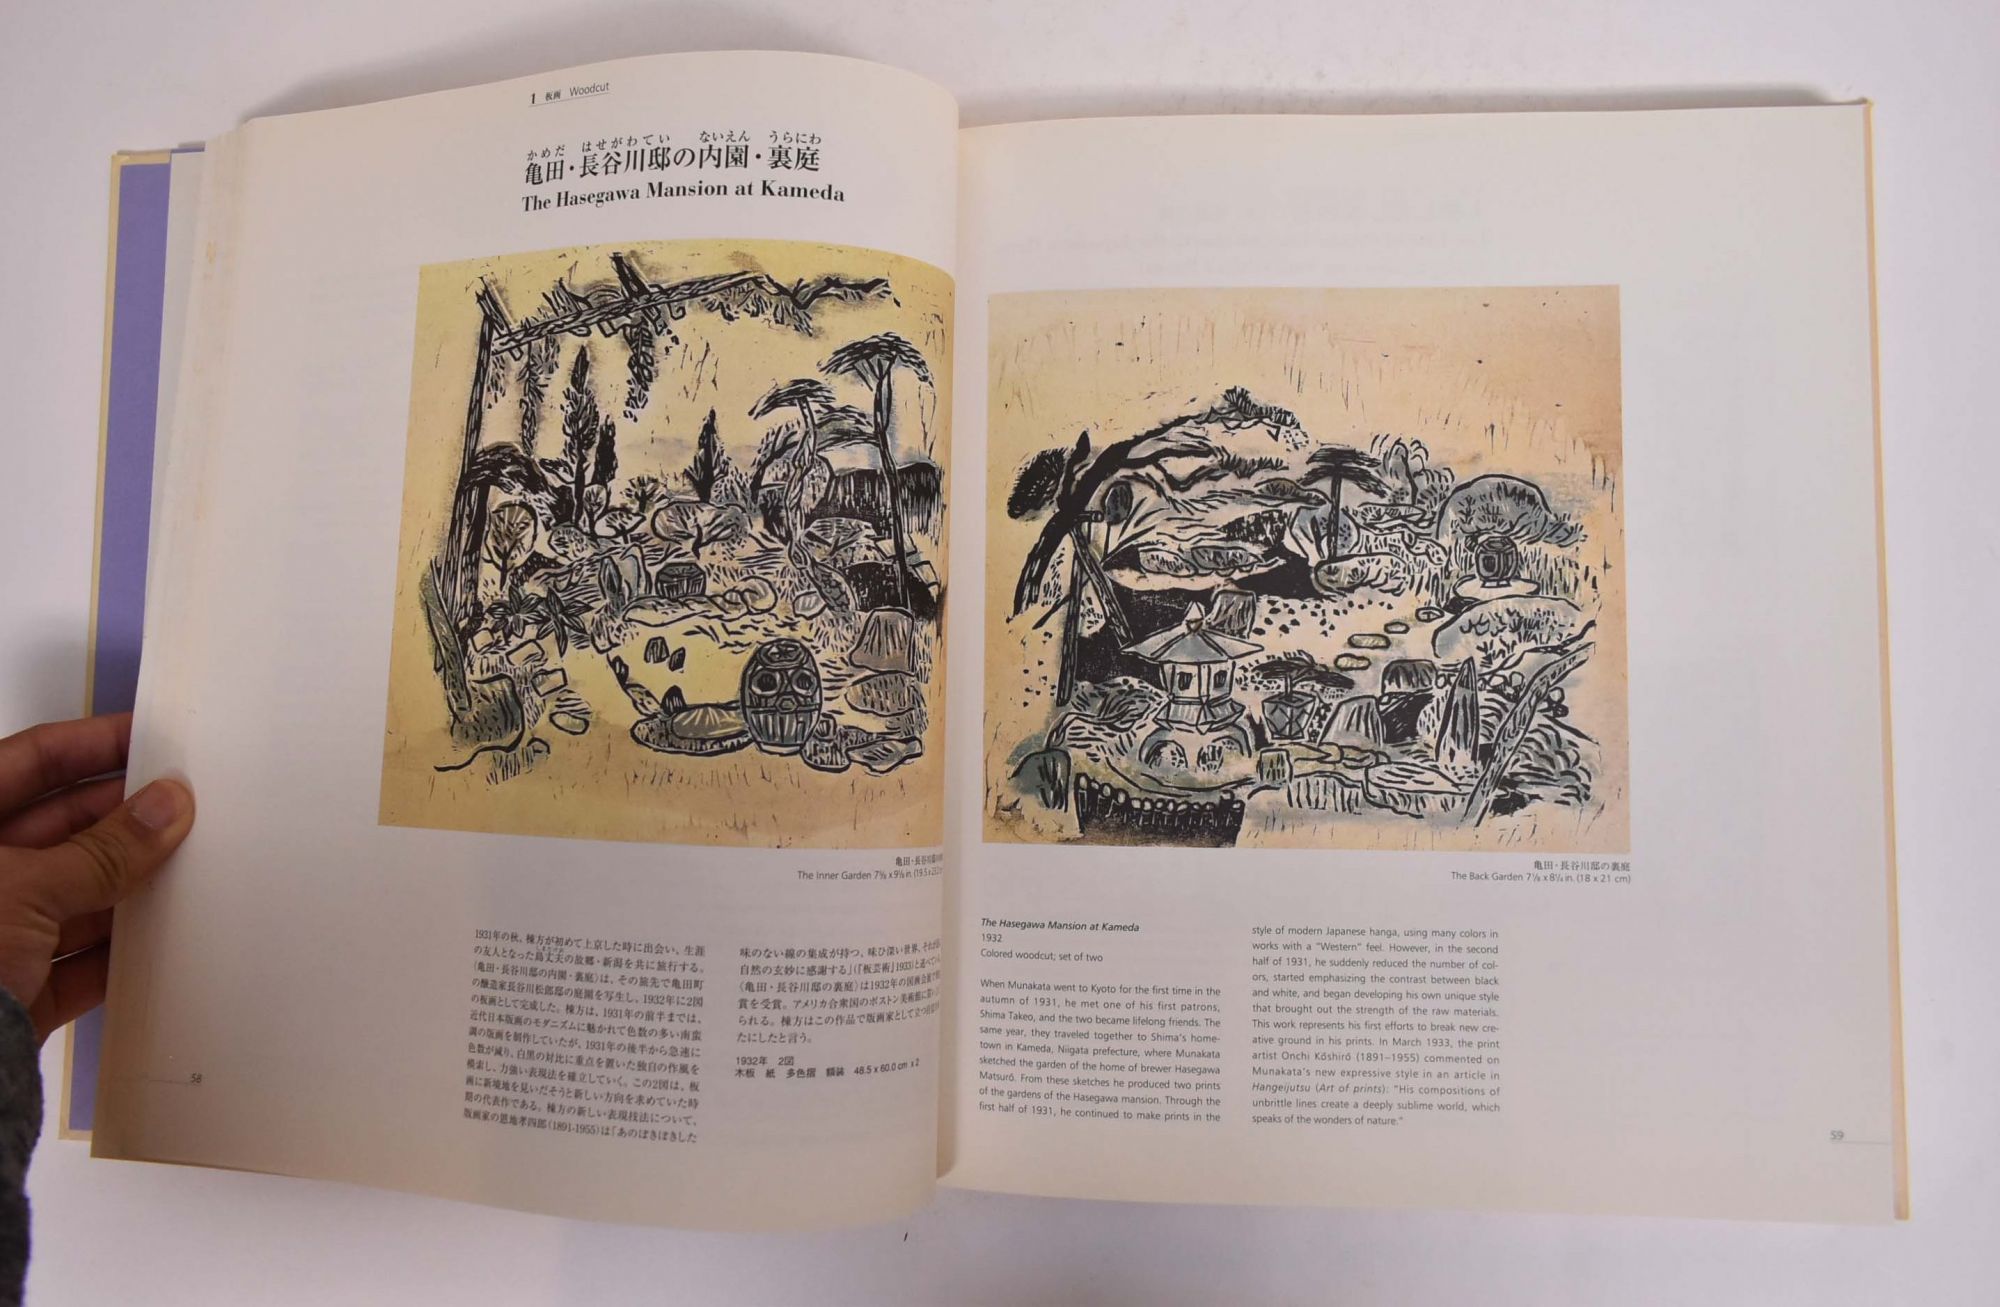 Munakata Shiko: Japanese Master of the Modern Print by Kawai Masatomo,  Hollis Goodall, Felice Fischer, Robert T. on Mullen Books